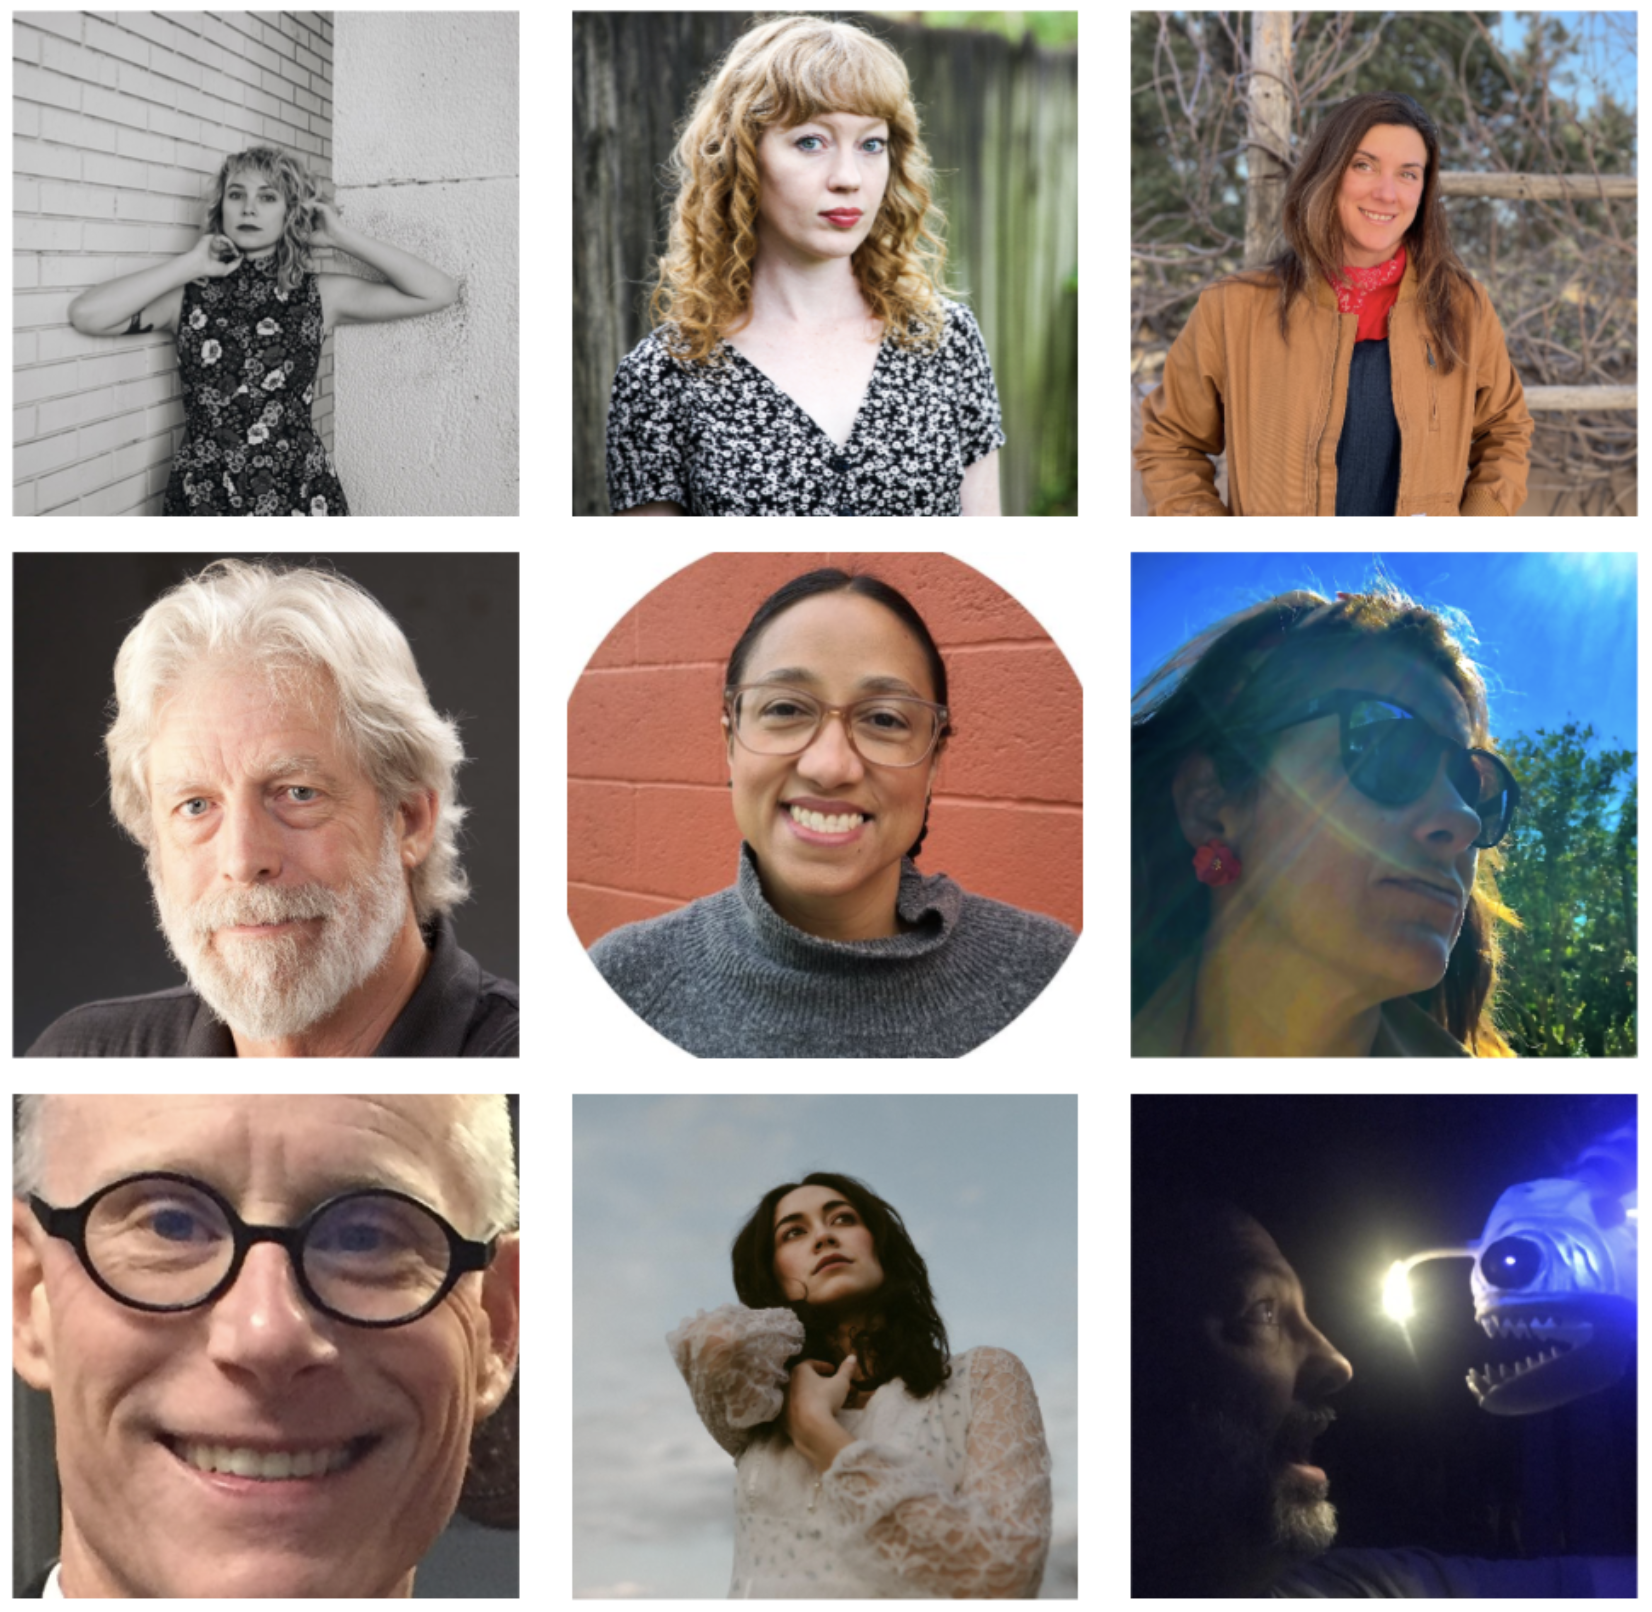 Meet the nine creative recipients of the 2022 ArtSpark grant!